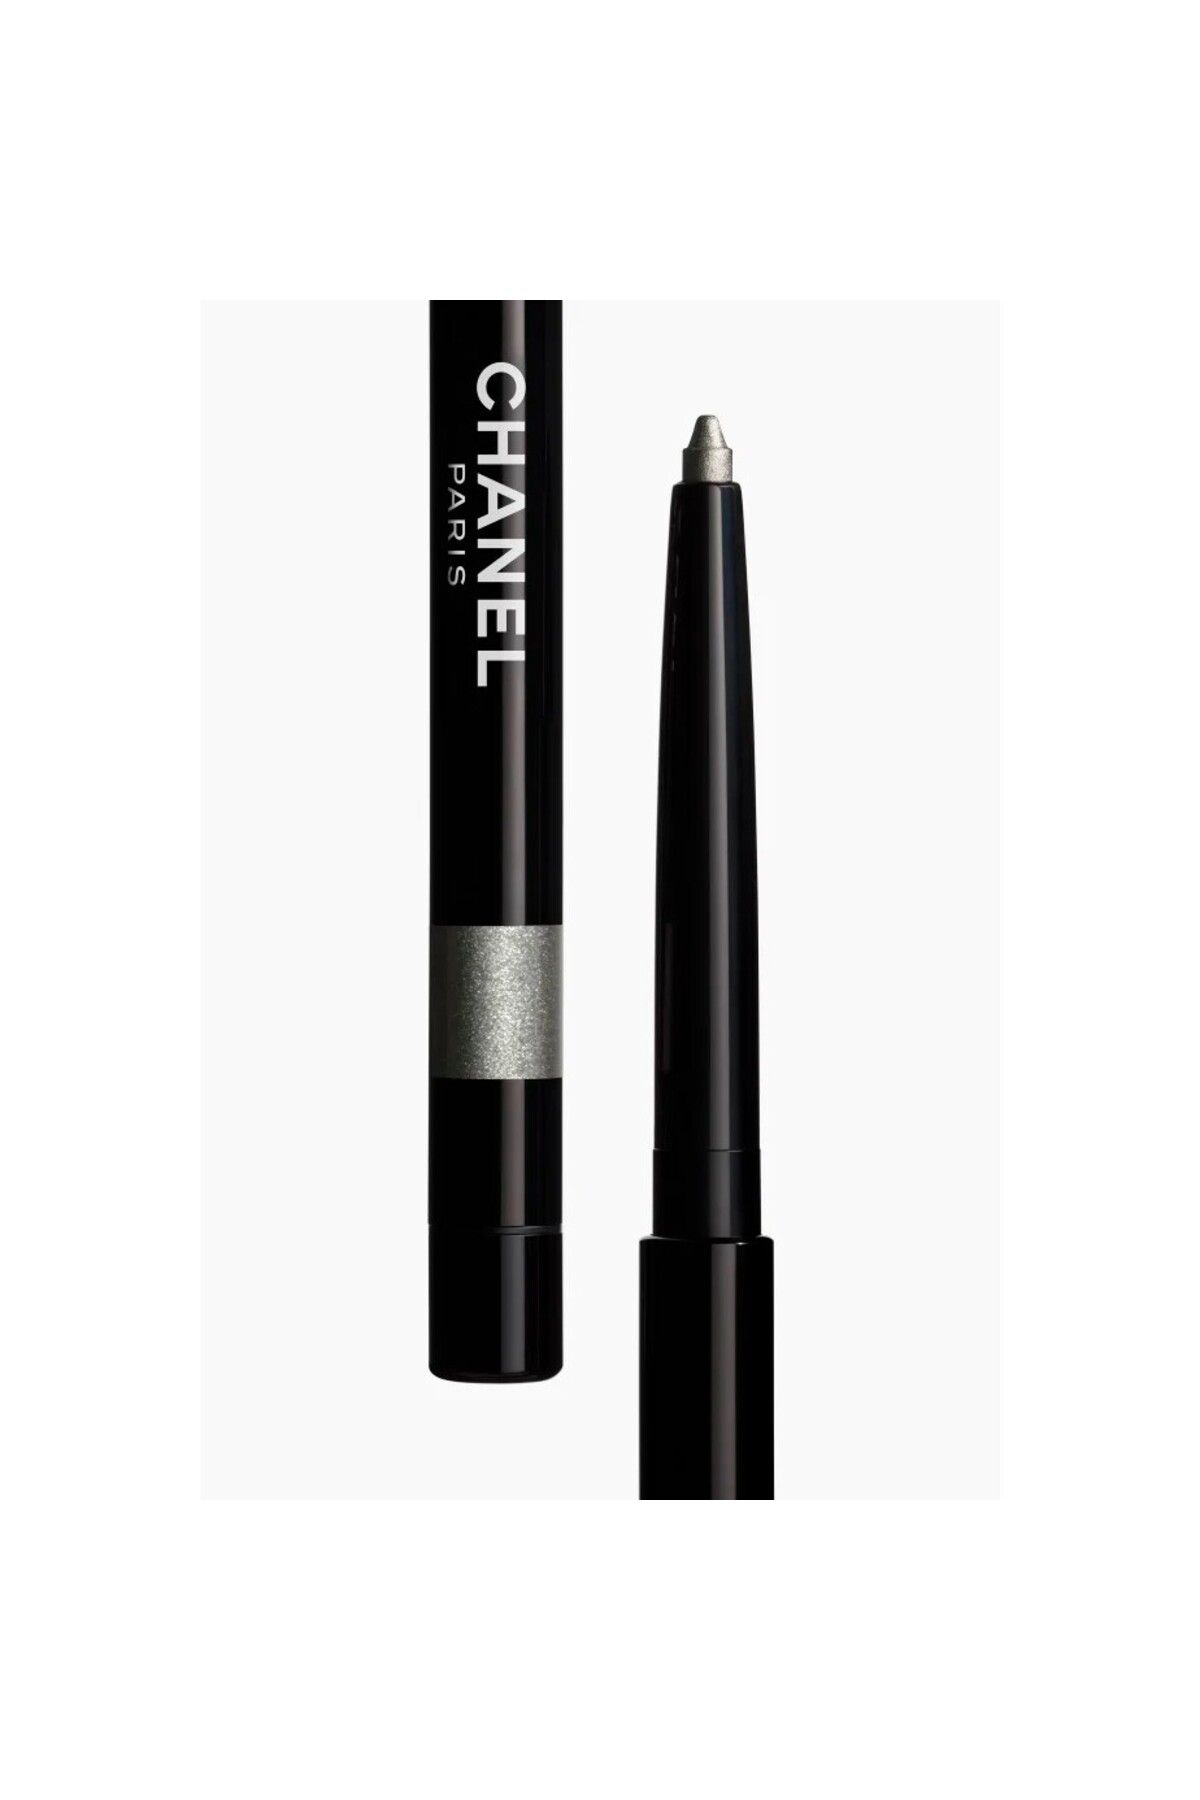 Chanel خط چشم STYLO YEUX مداد چشم ضد آب ماندگاری 24 ساعت و خطوطی دقیق و رنگی رنگ خاکستری